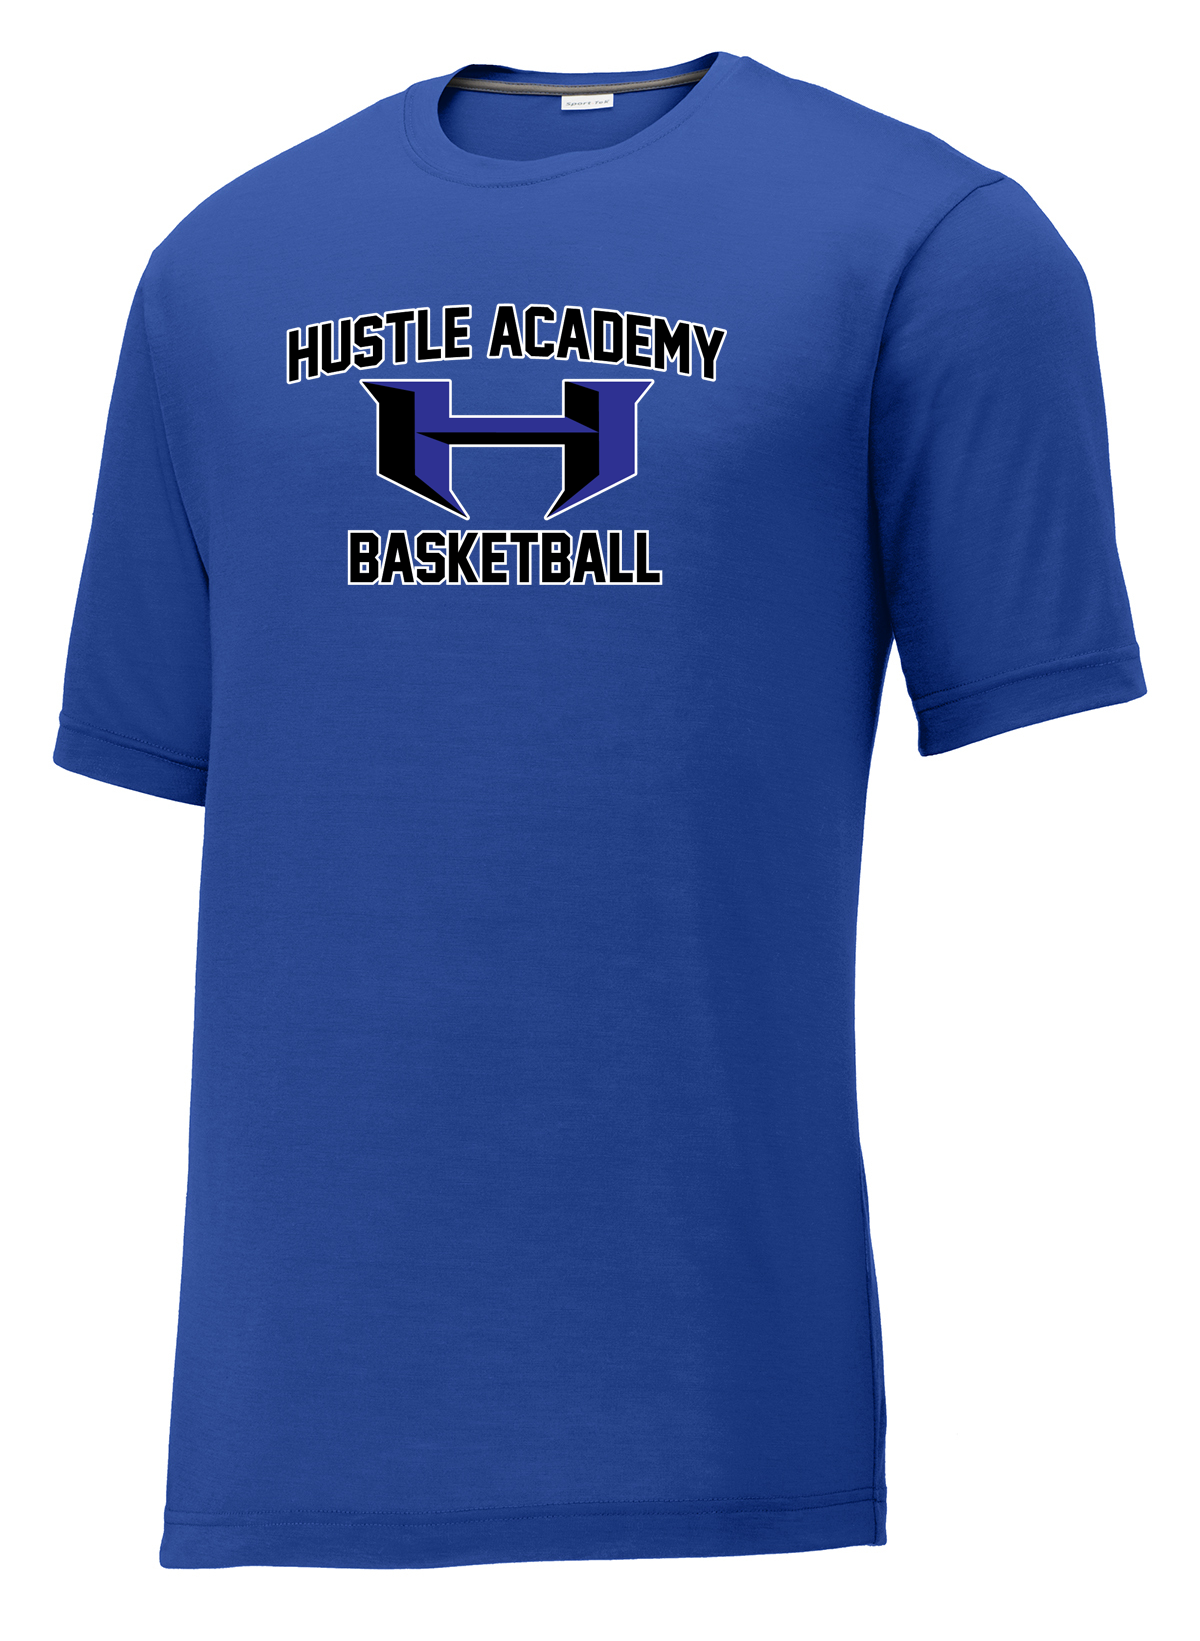 Hustle Academy Basketball CottonTouch Performance T-Shirt